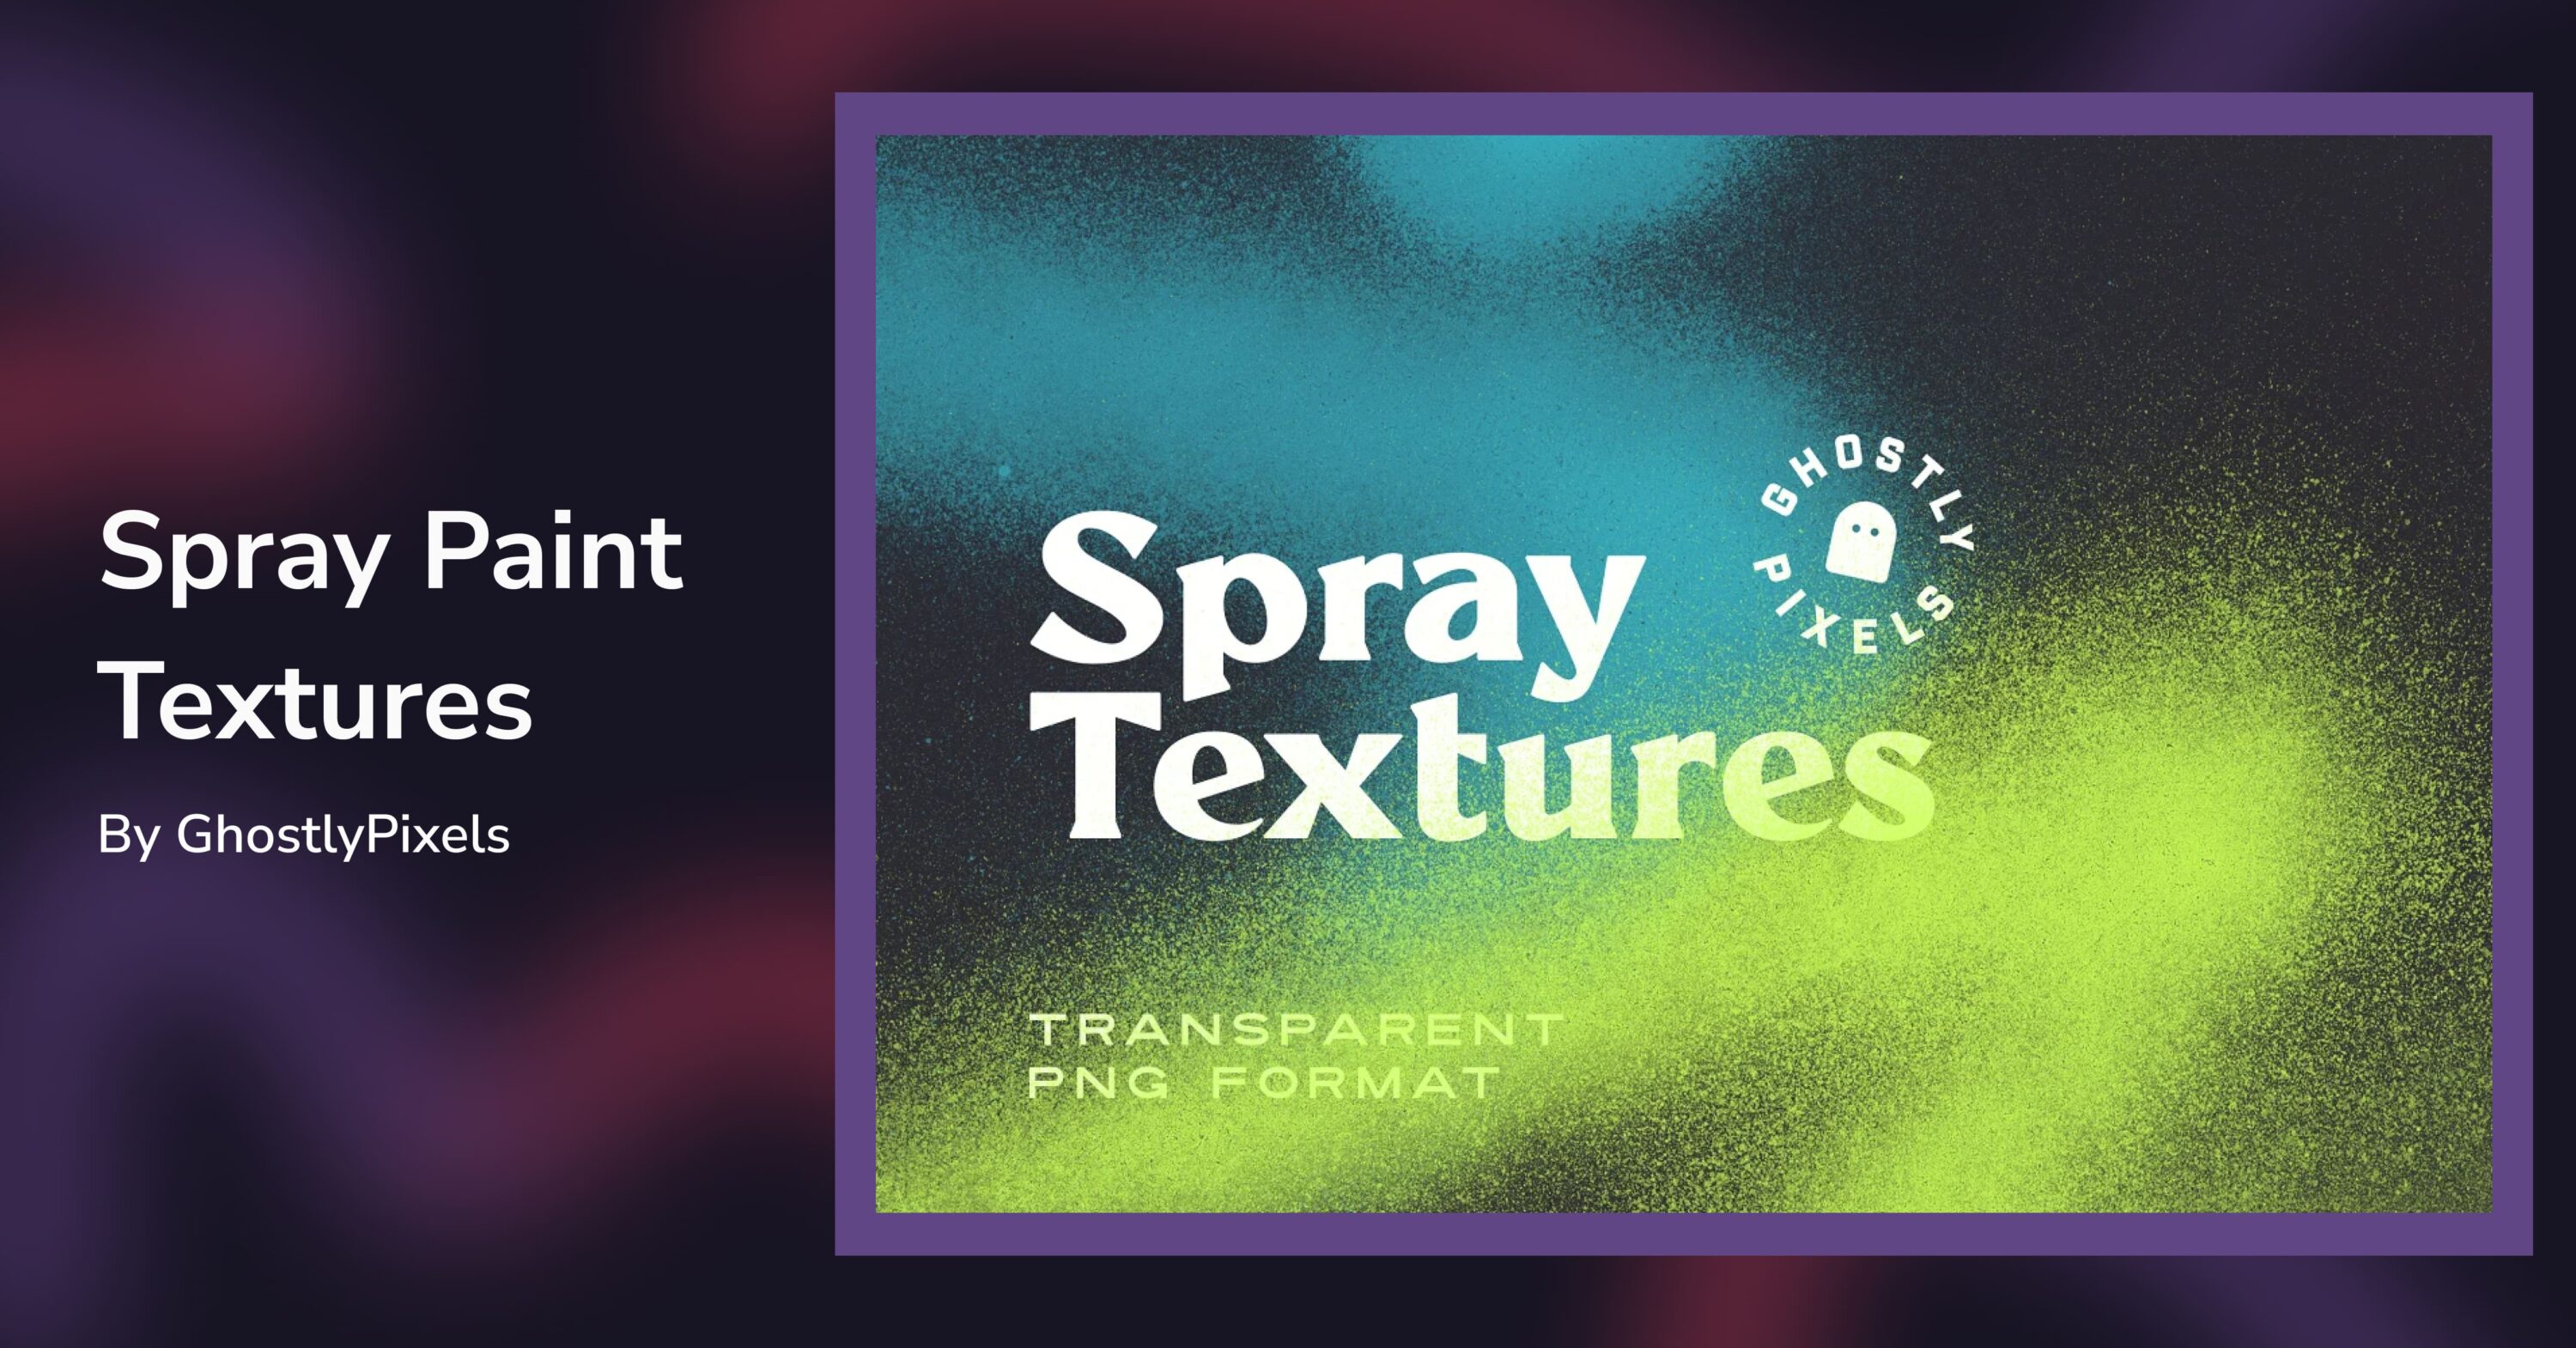 Spray Paint Textures facebook image.